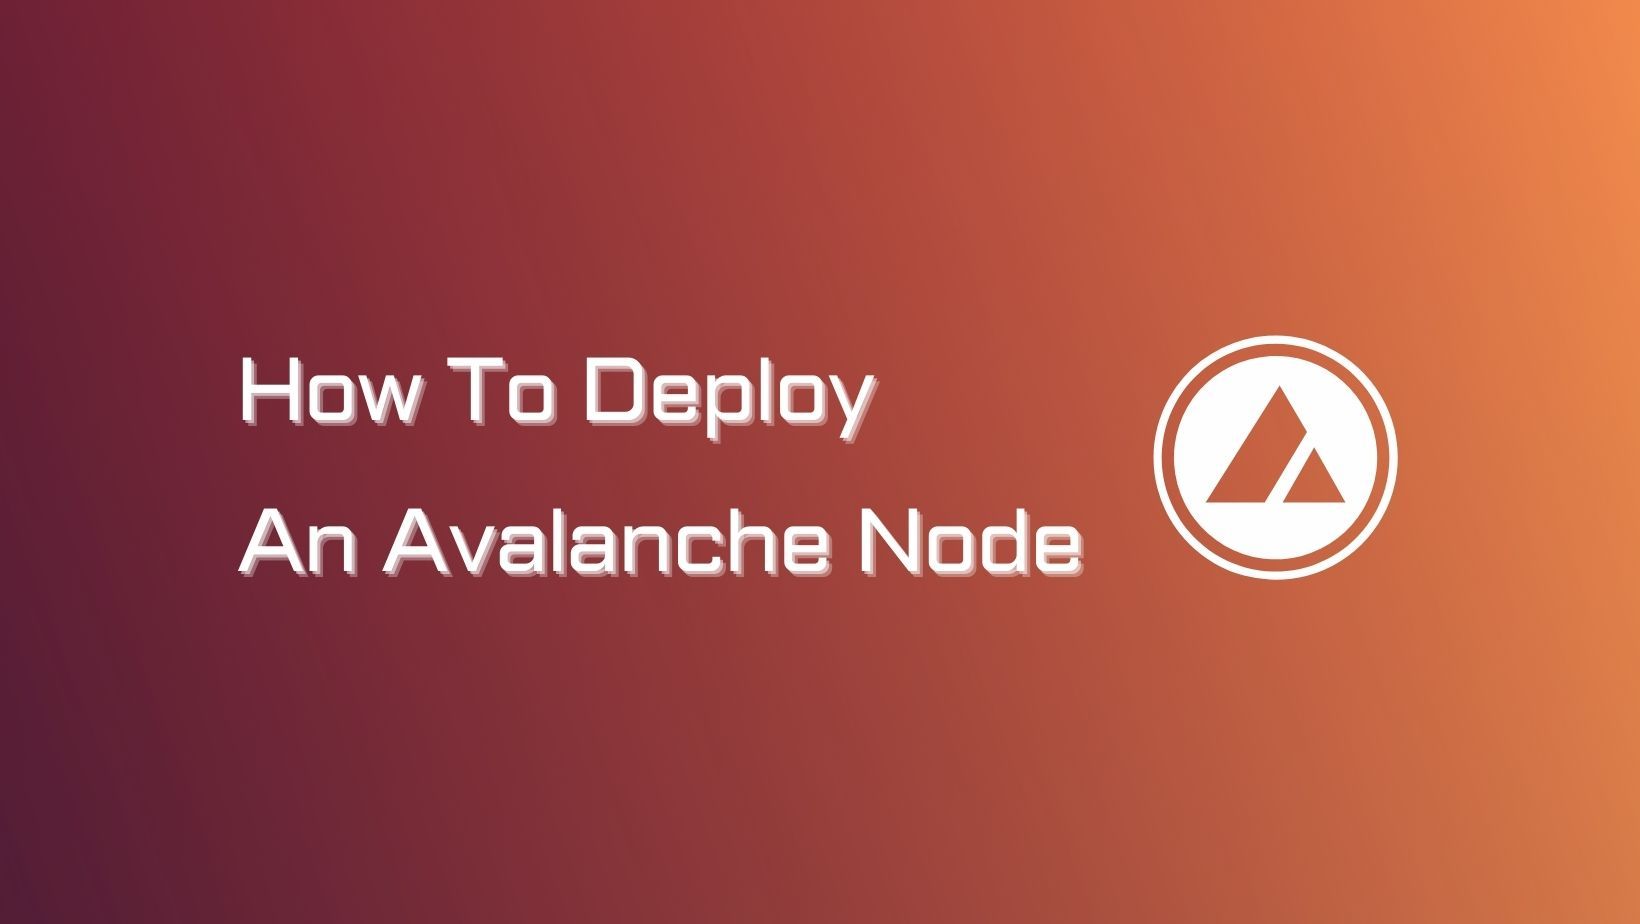 How to Deploy an Avalanche Node: Manual Node Setup